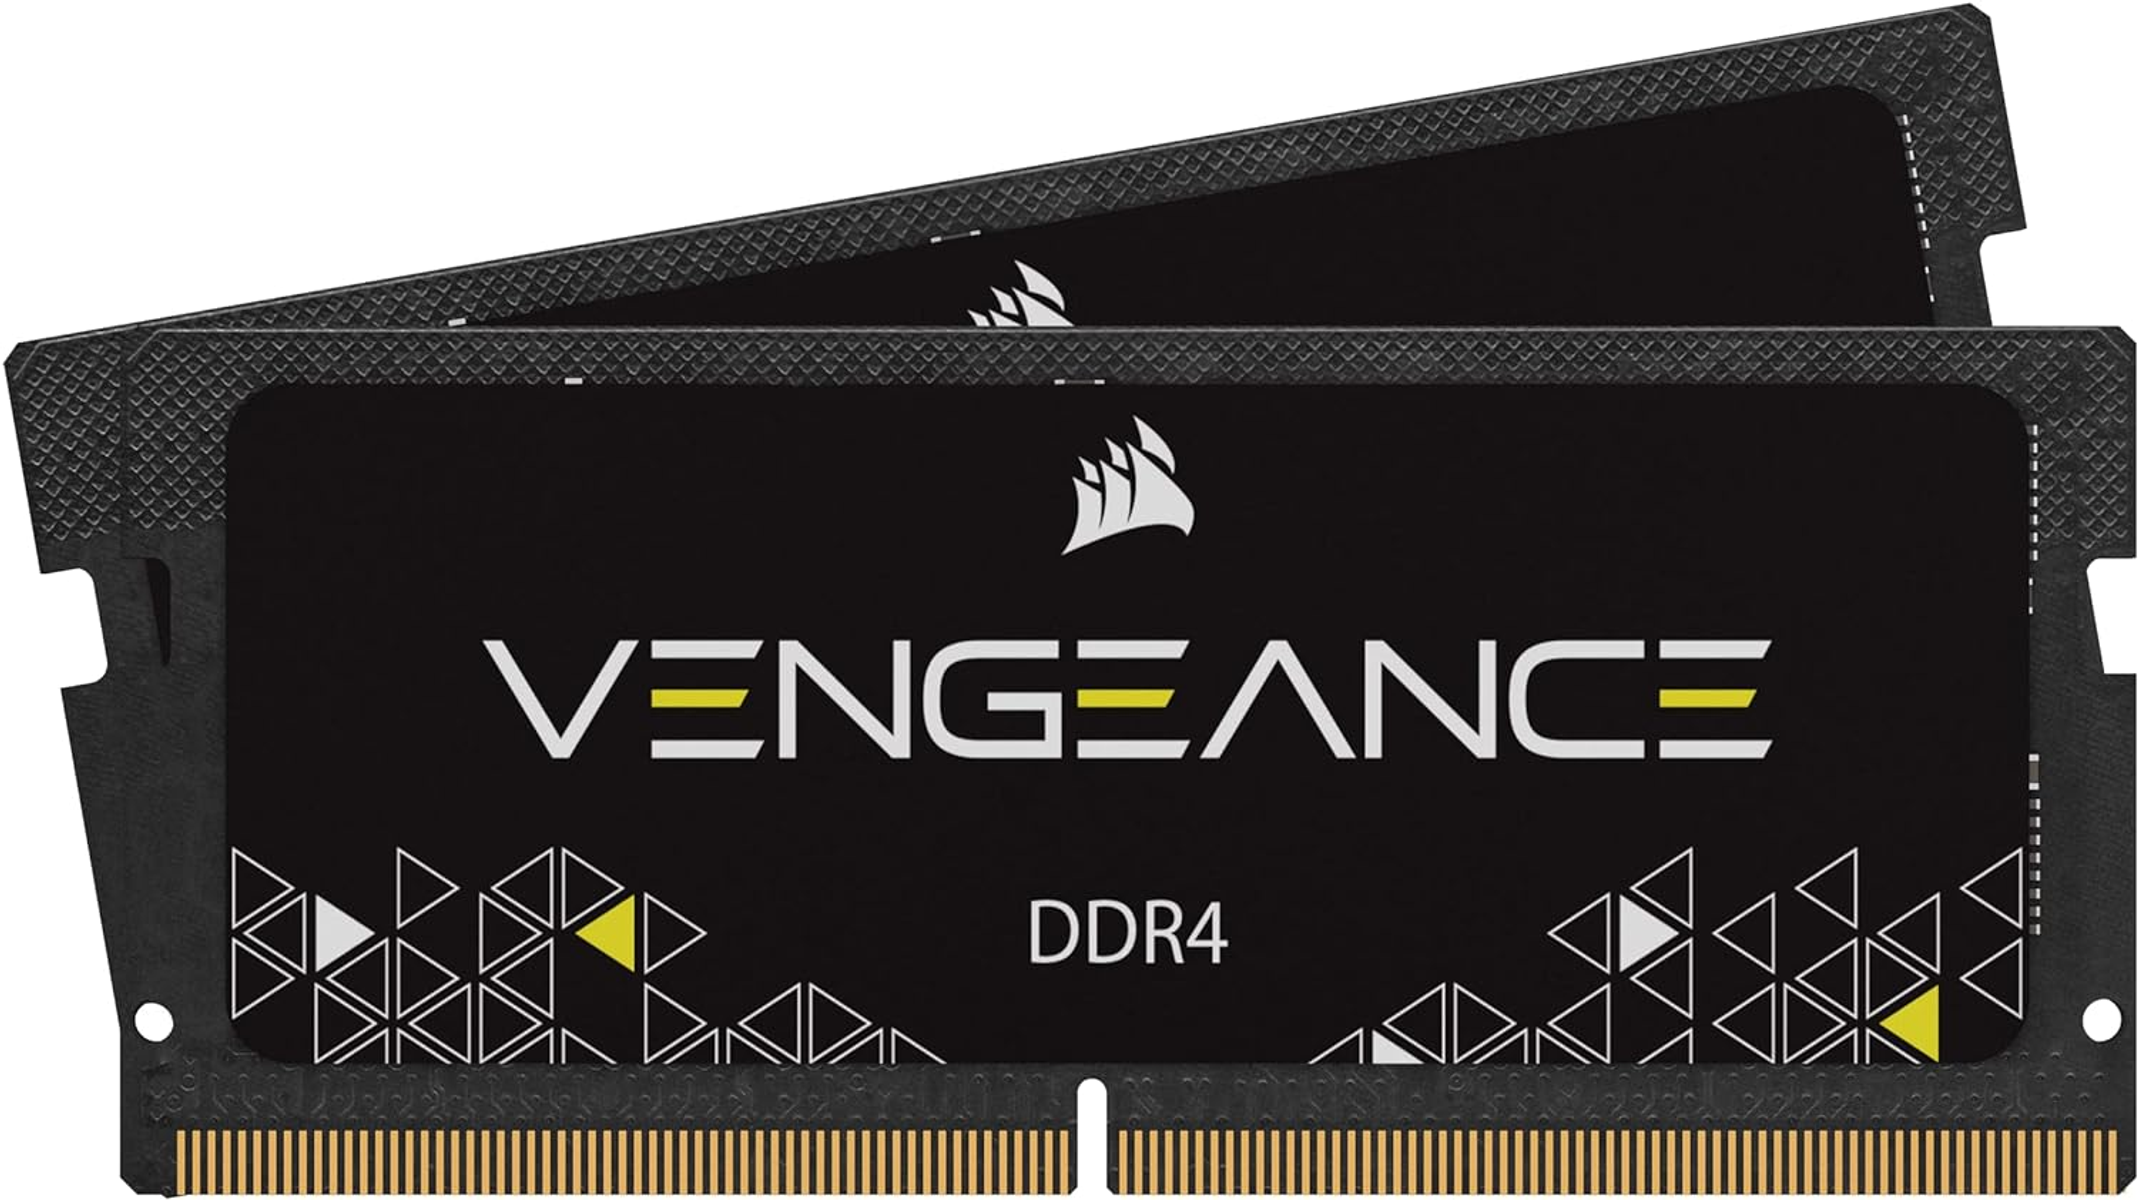 DDR4 GB 64 Speicher-Kit CORSAIR 2x32GB,1.2V